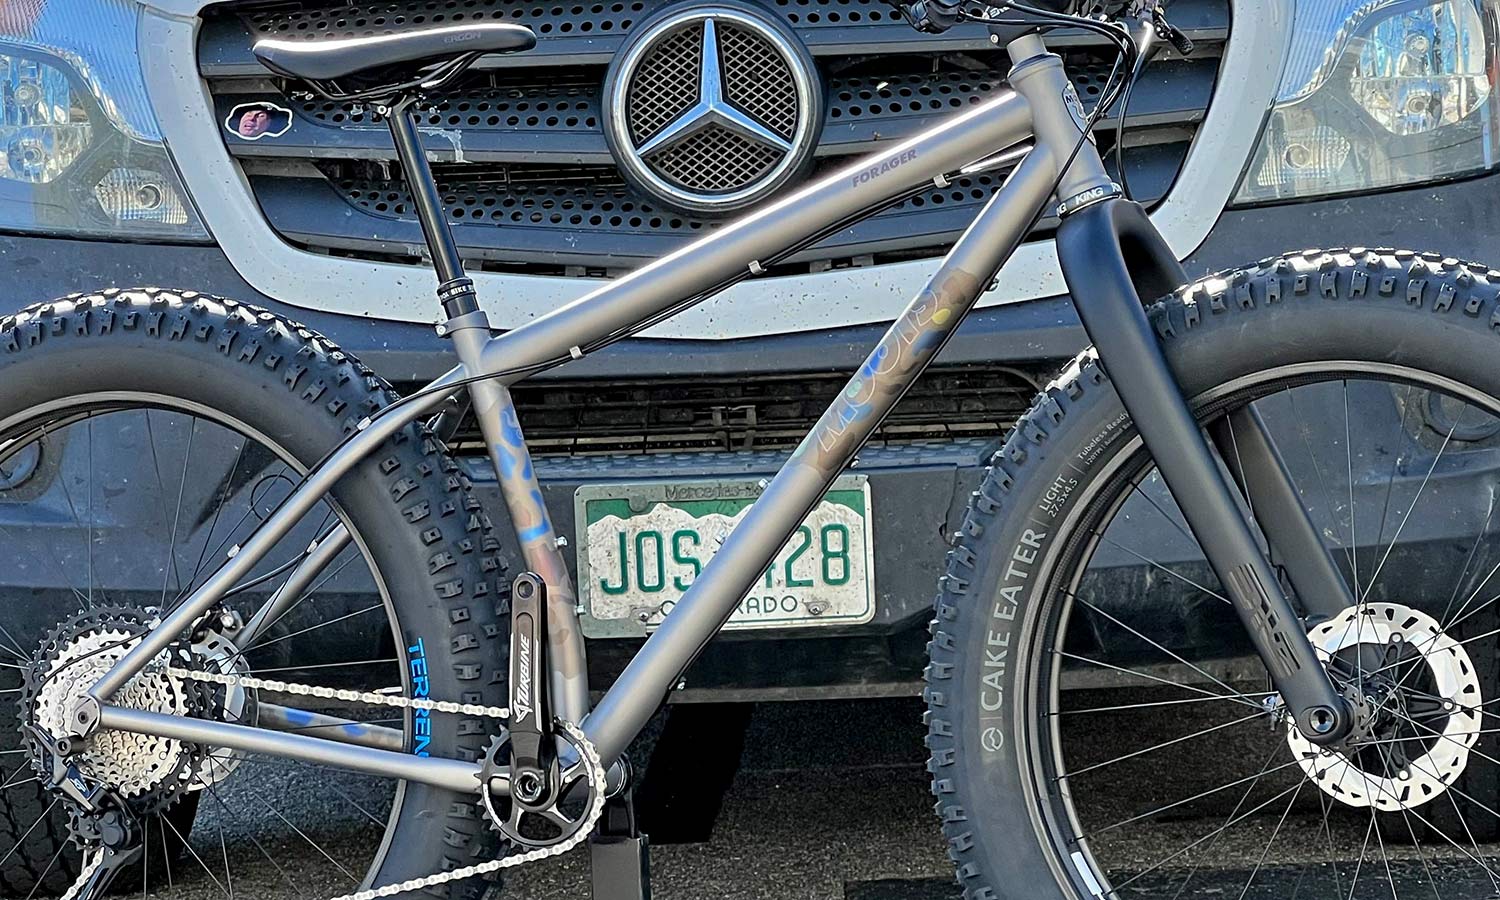 Moots Forager titanium fat bike sneak peek, huge 27.5x4.5" tire snow bike, frame detail